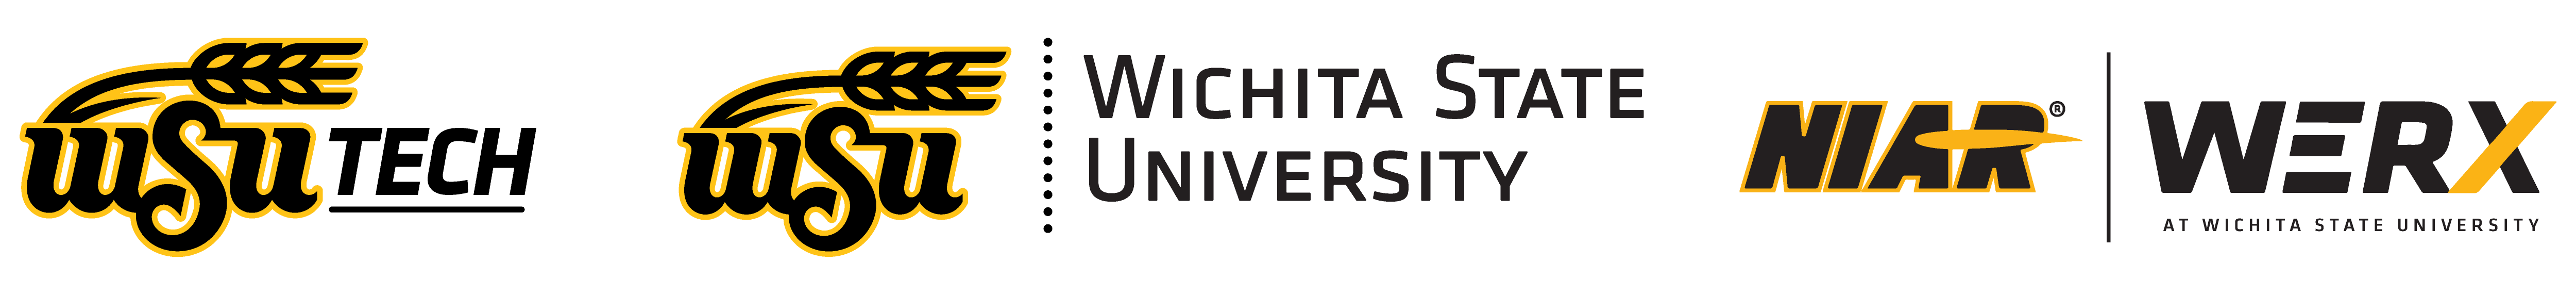 WSU Tech, Wichita State University and NIAR WERX logos